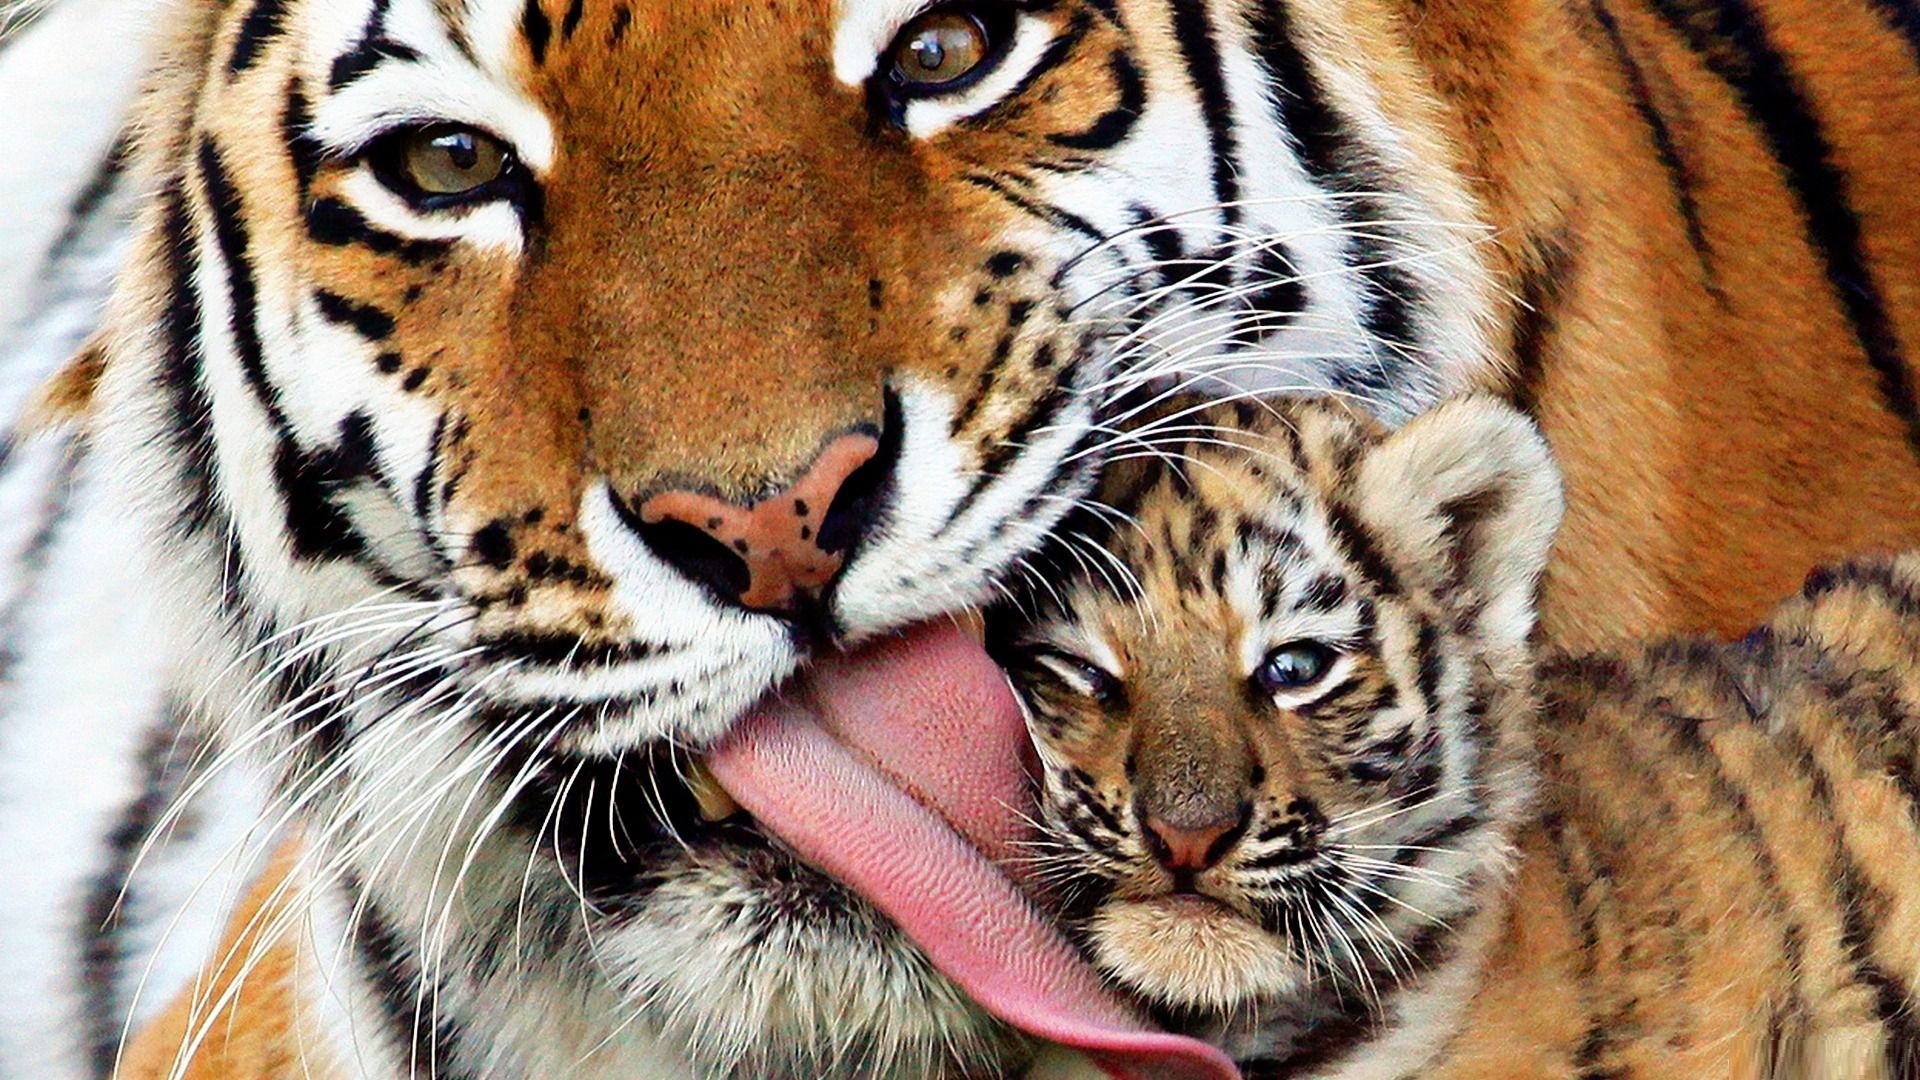 5000 Striking Tiger Pictures  Images HD  Pixabay